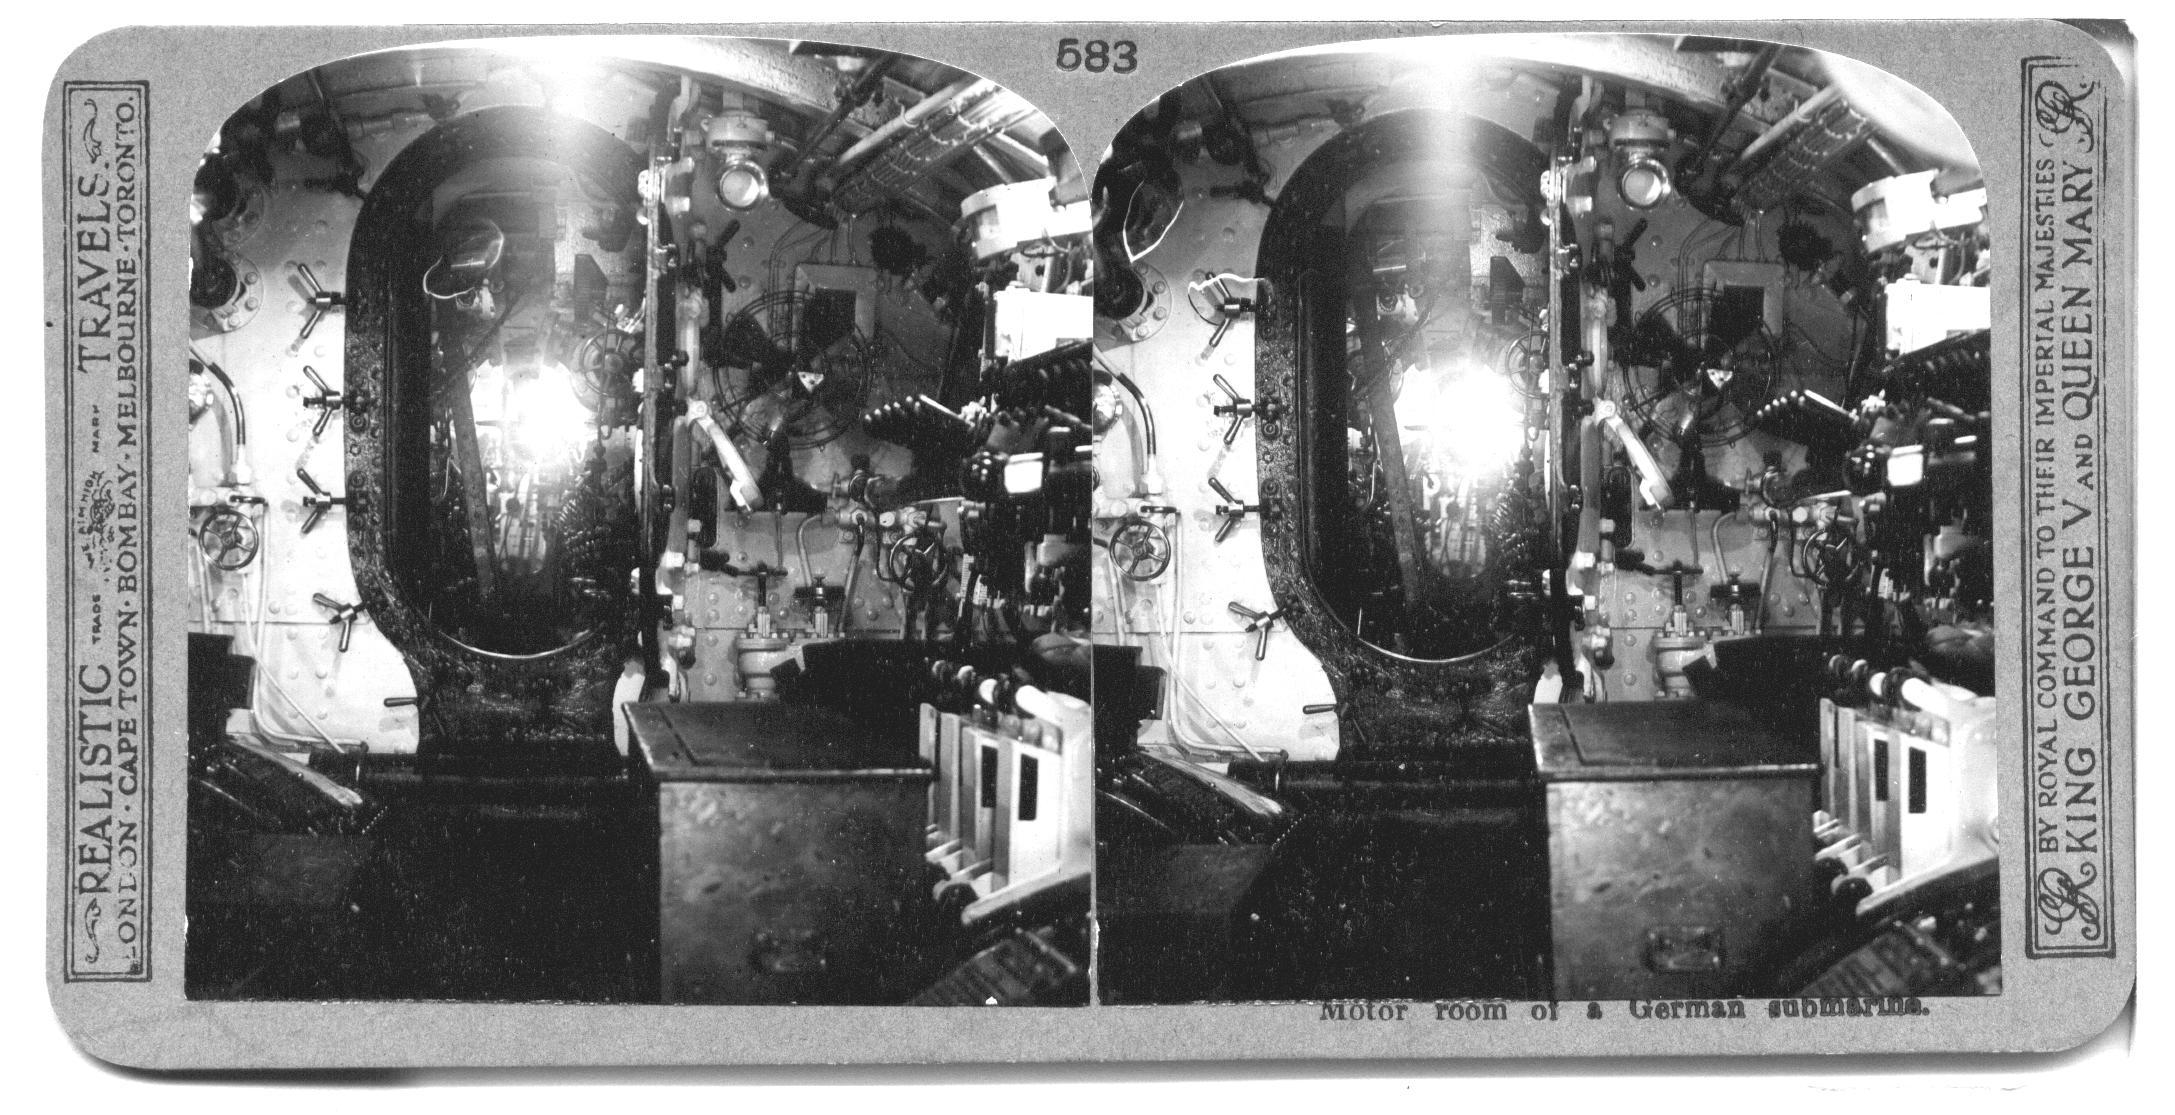 Motor room of a German submarine